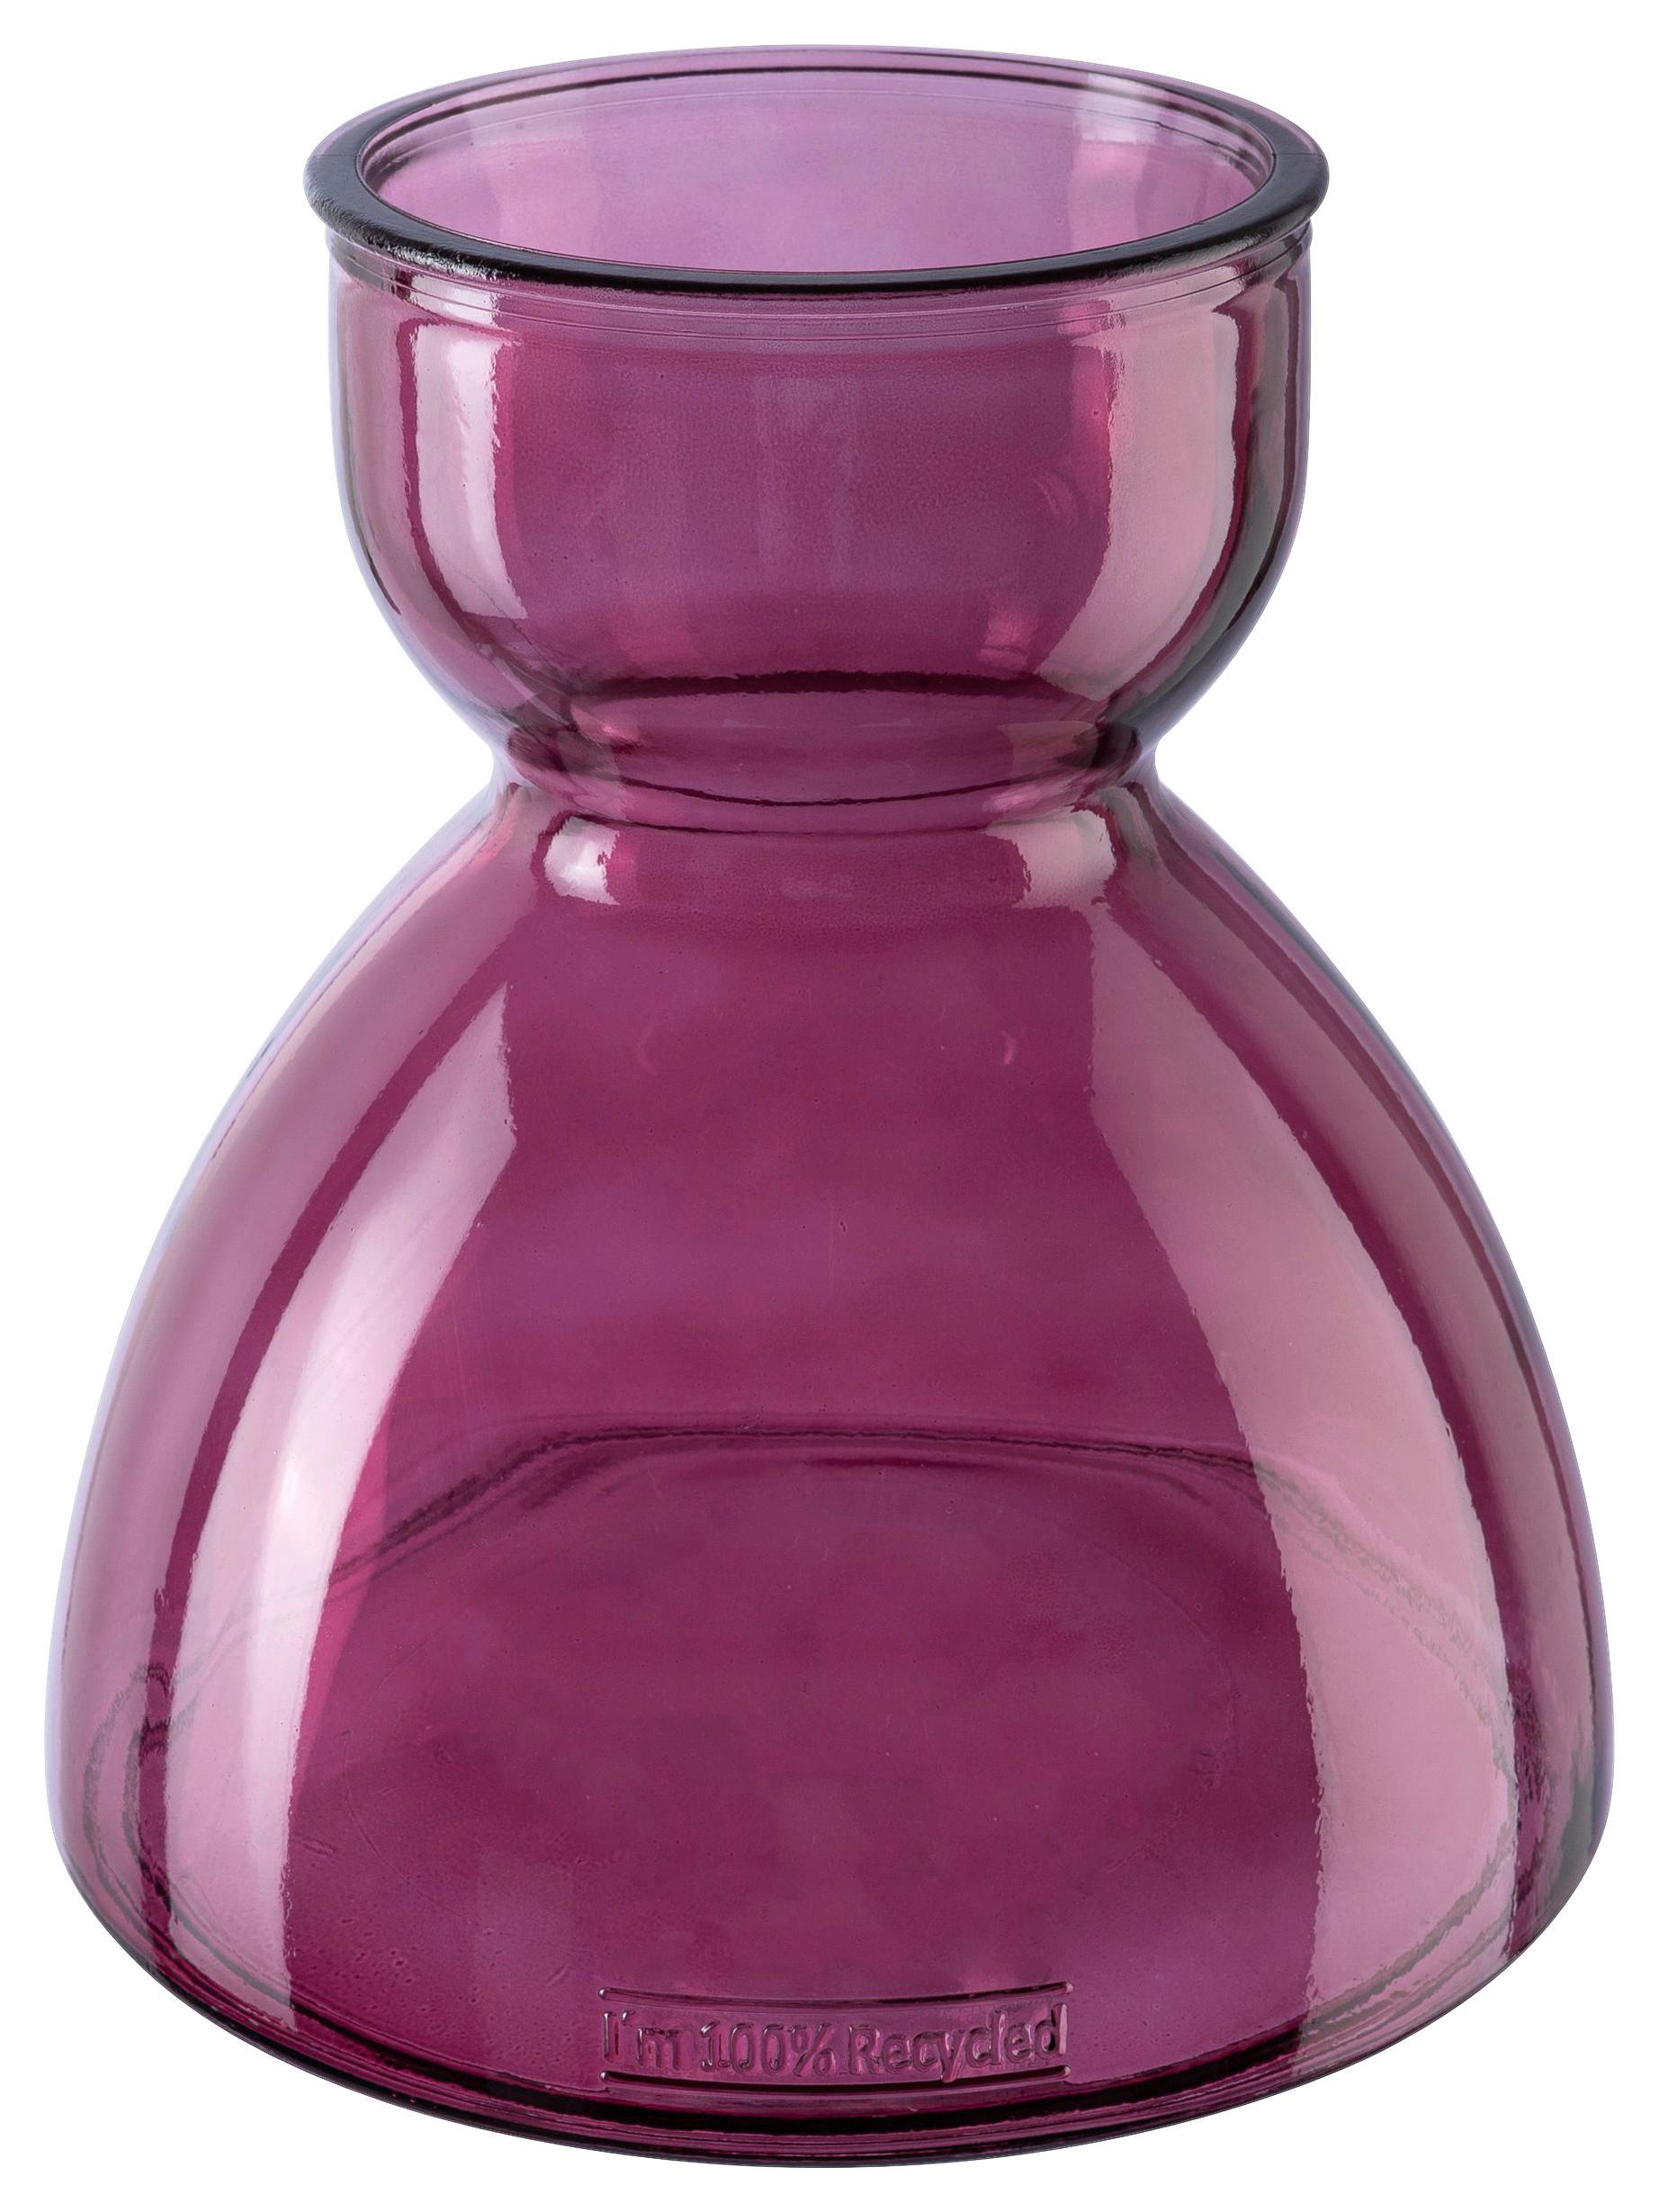 Vaza Paula I -Paz- - barve robide, Moderno, steklo (22/23cm) - Premium Living